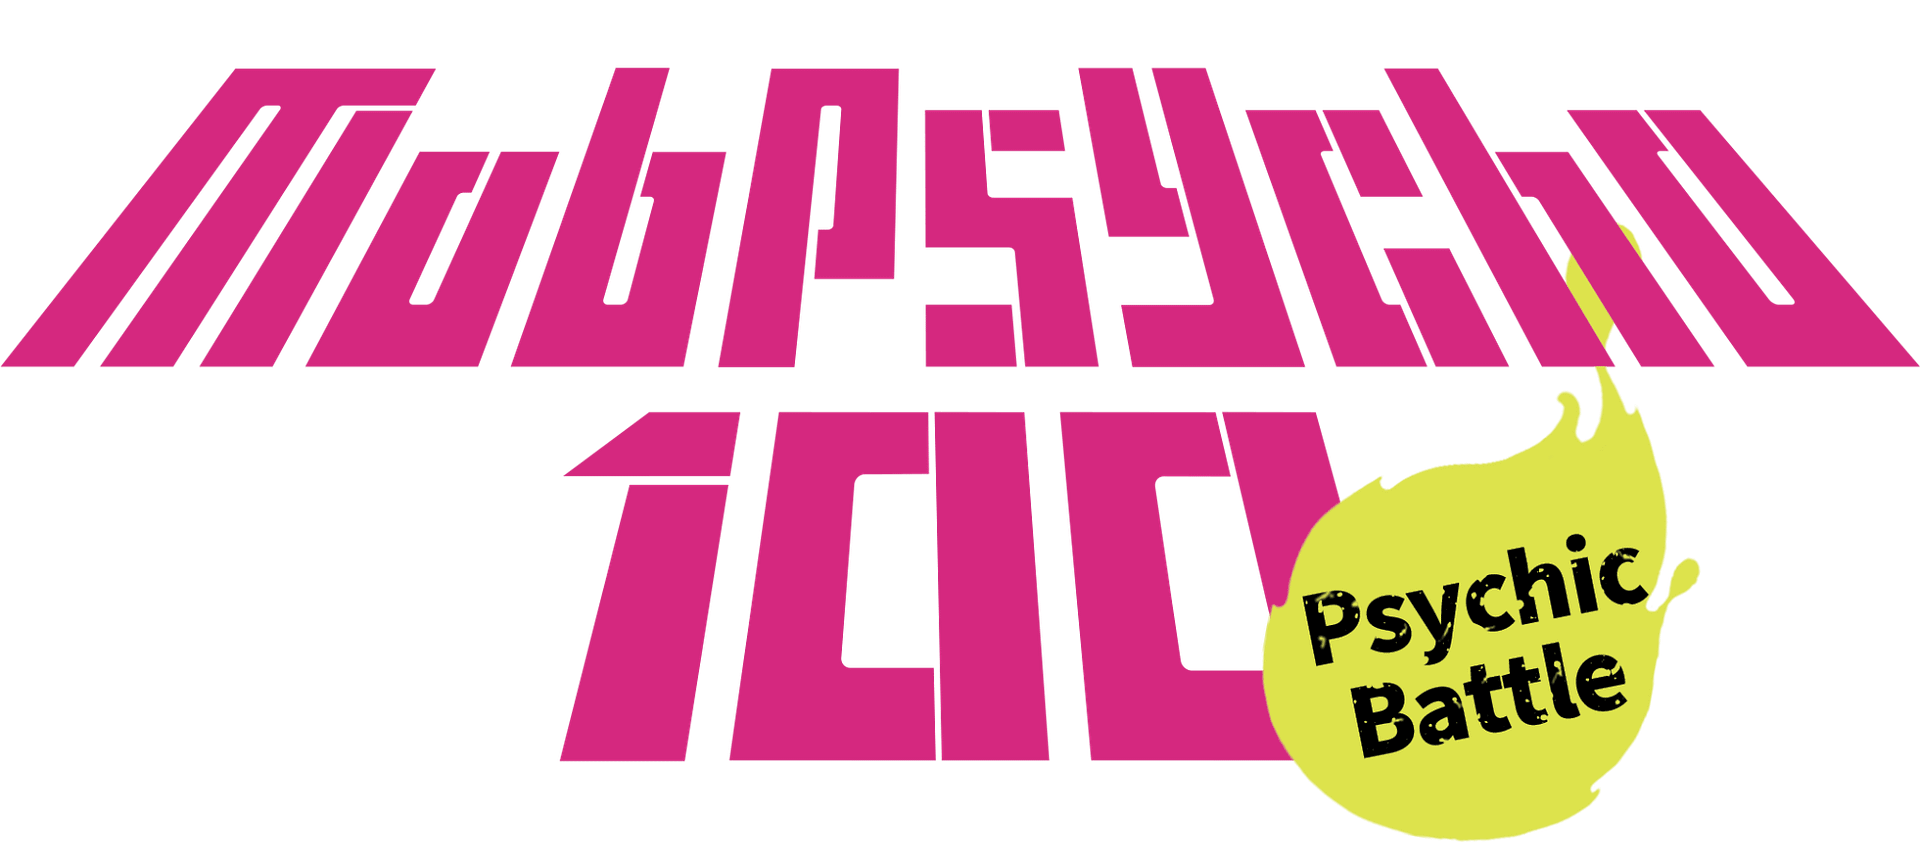 "Mob Psycho 100: Psychic Battle" Coming Soon From Crunchyroll